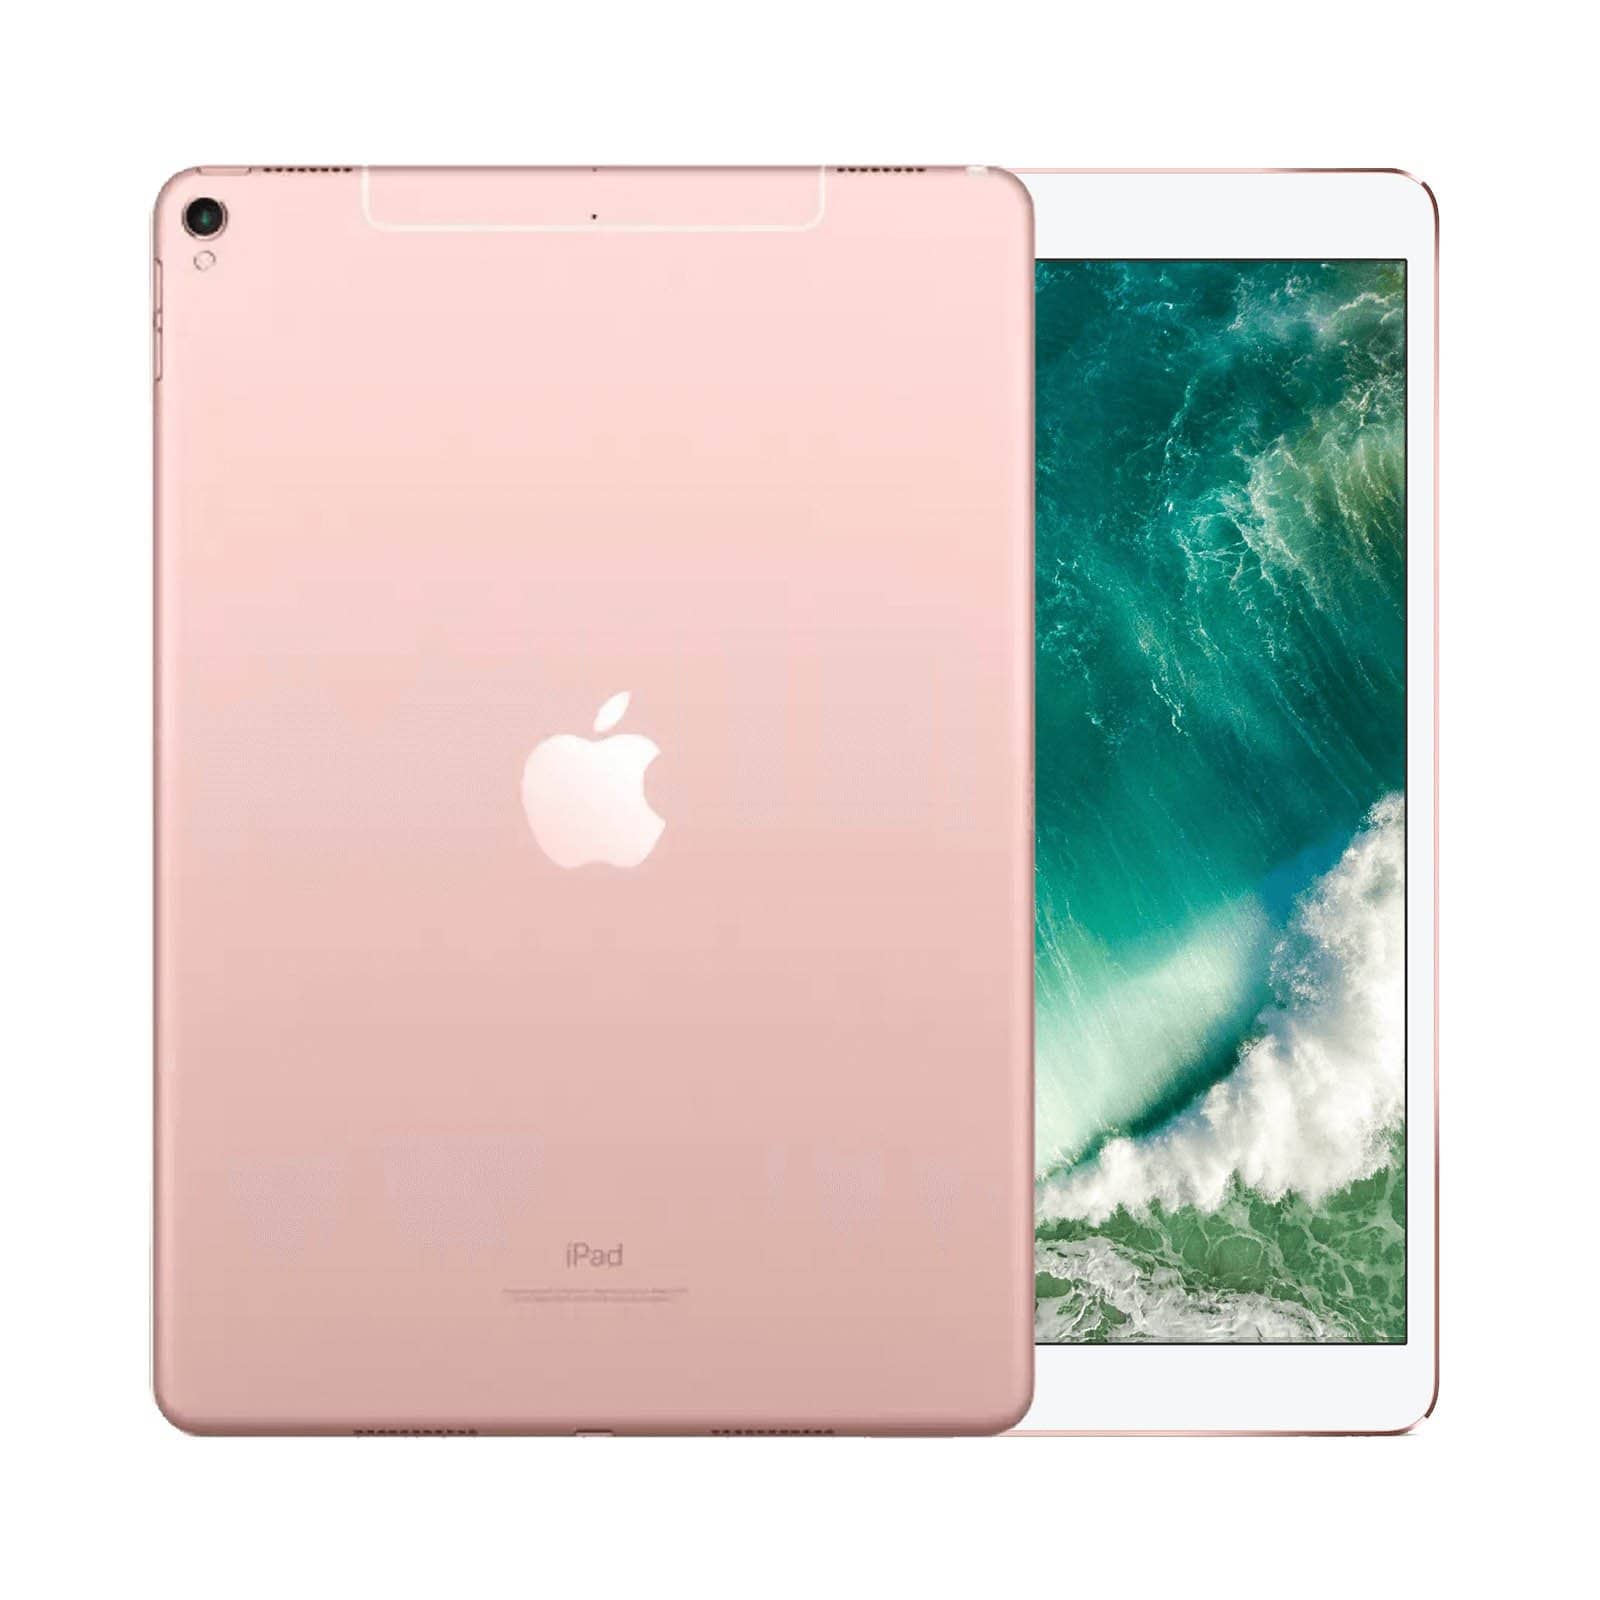 iPad Pro 10.5 Inch 512GB Rose Gold Very Good - Unlocked 512GB Rose Gold Very Good